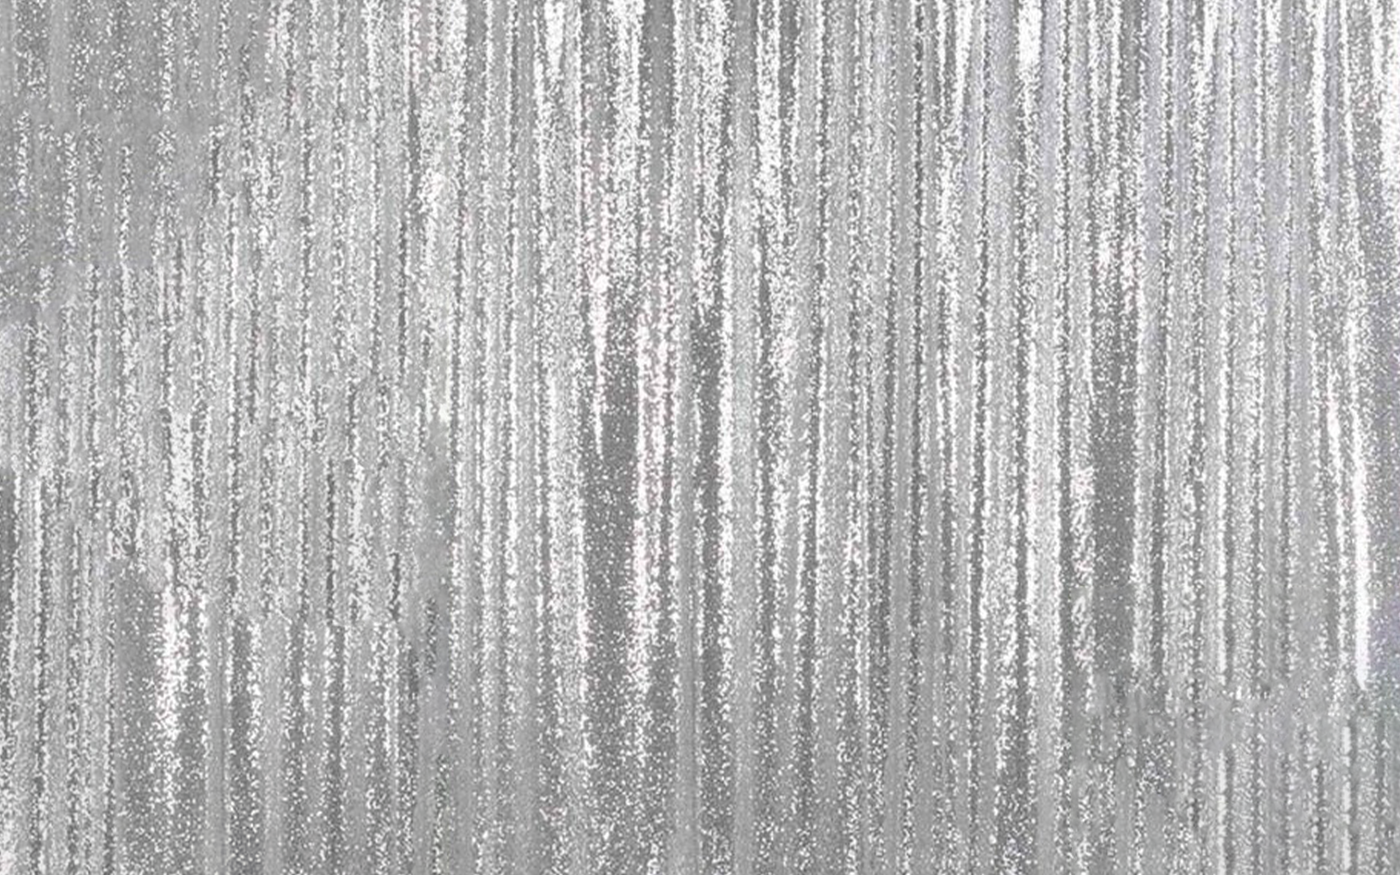 Super bright sparkling silver sequin photo booth backdrop